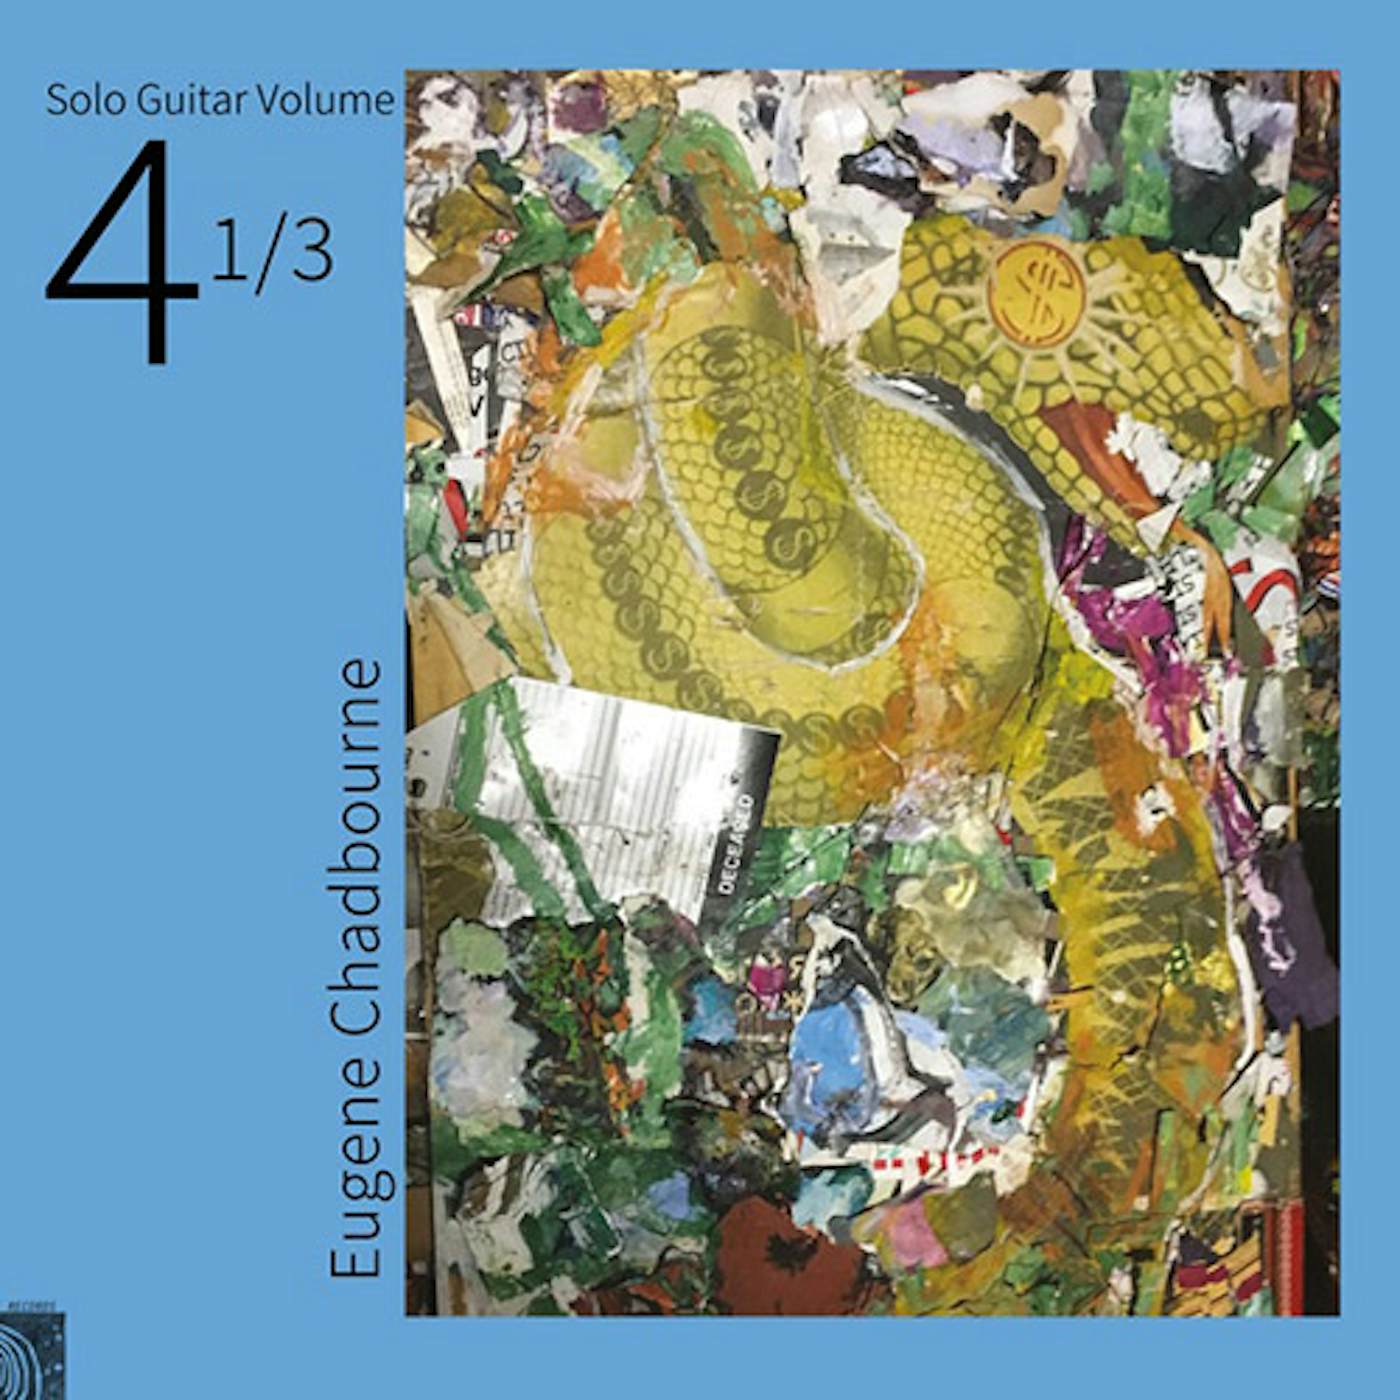 Eugene Chadbourne SOLO GUITAR VOLUME 4-1 / 3 Vinyl Record